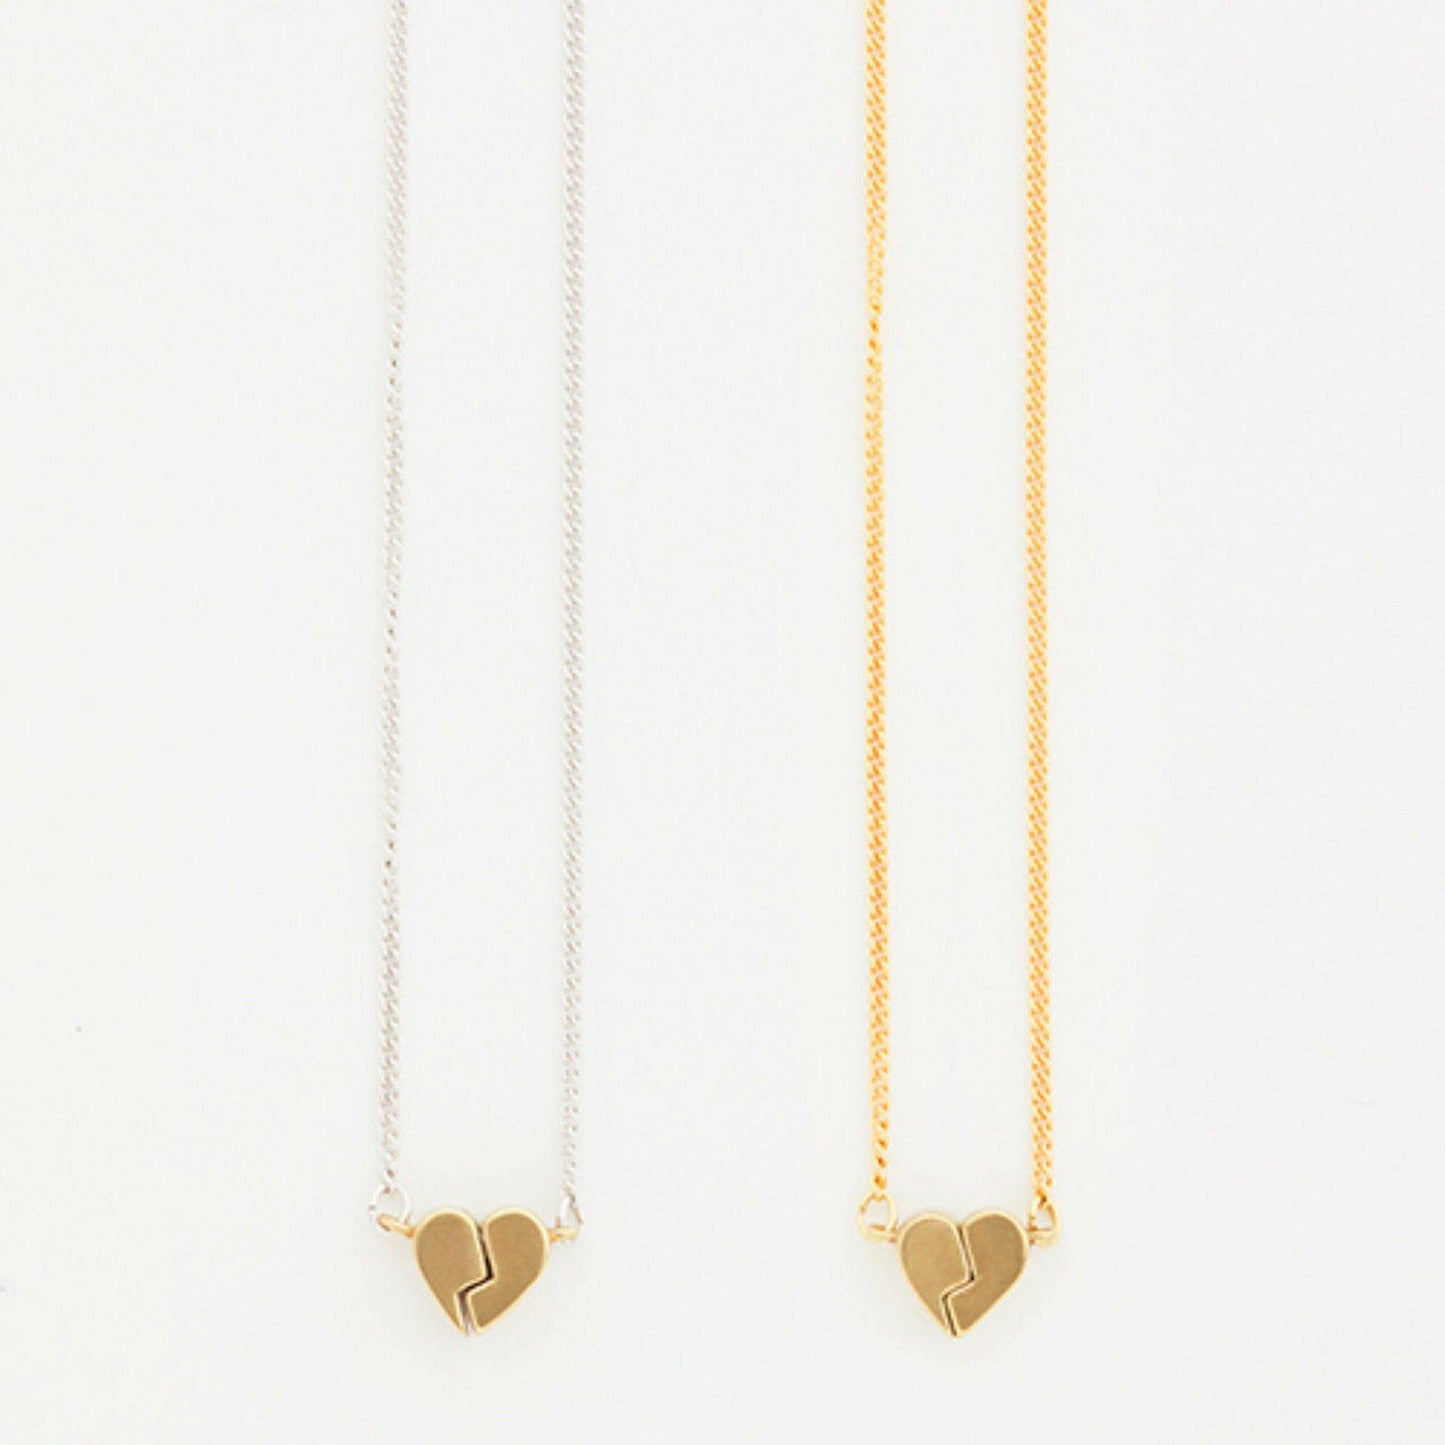 Aquvii(アクビ) | 磁石でくっつくハートがモチーフのネックレス Kissing Necklace [aq.095] - Sopwith camel